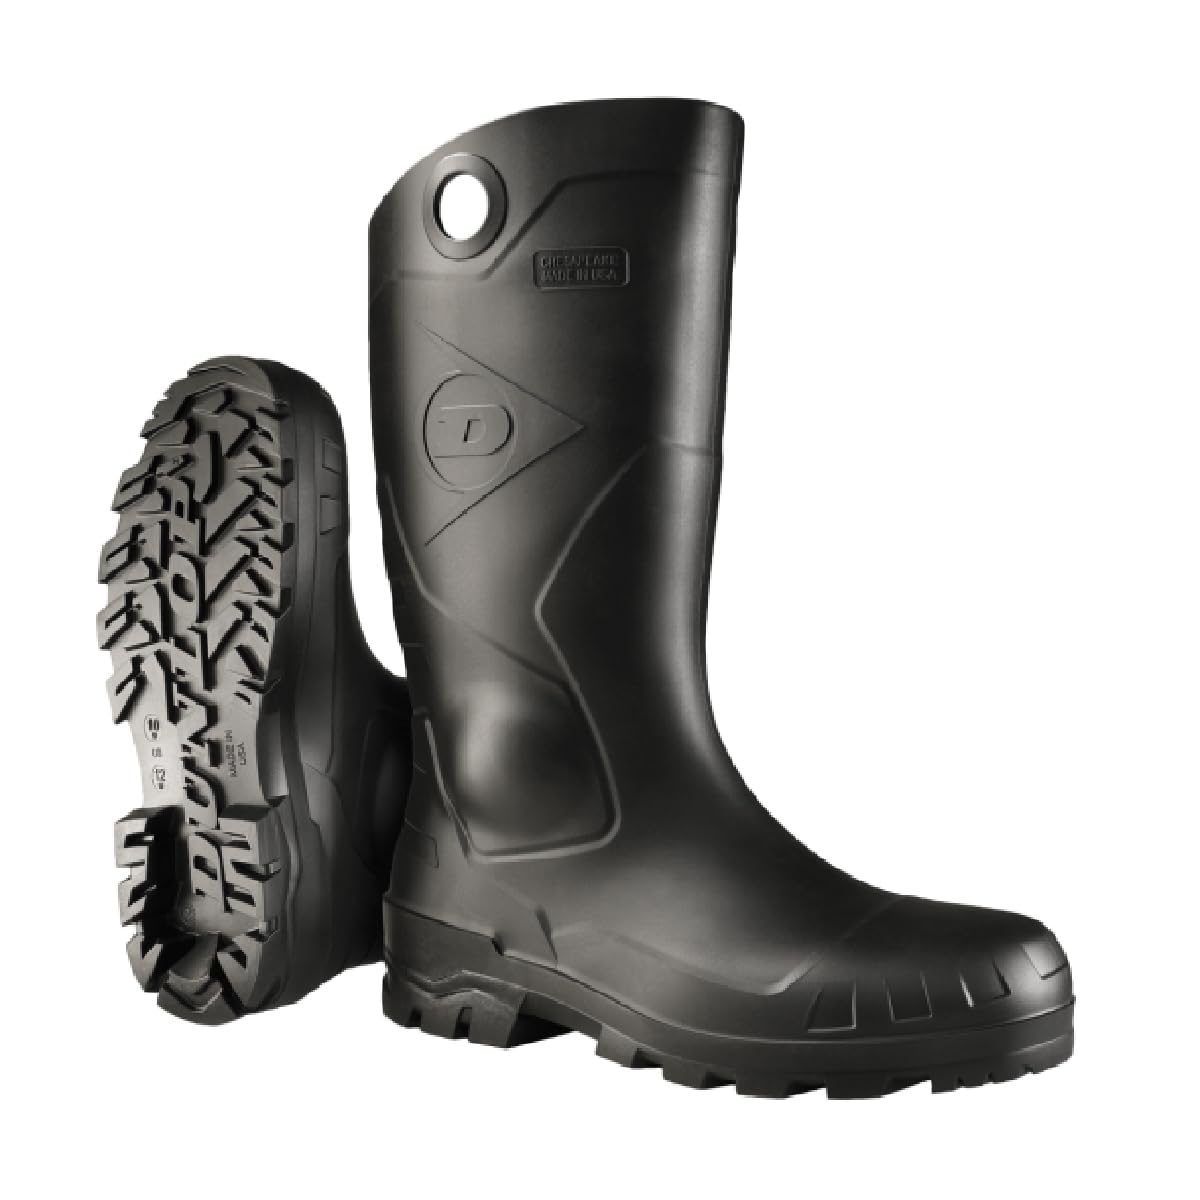 Dunlop Protective Footwear,Chesapeake plain toe Black Amazon, 100% Waterproof PVC, Lightweight and Durable8677577.10, Size 10 US